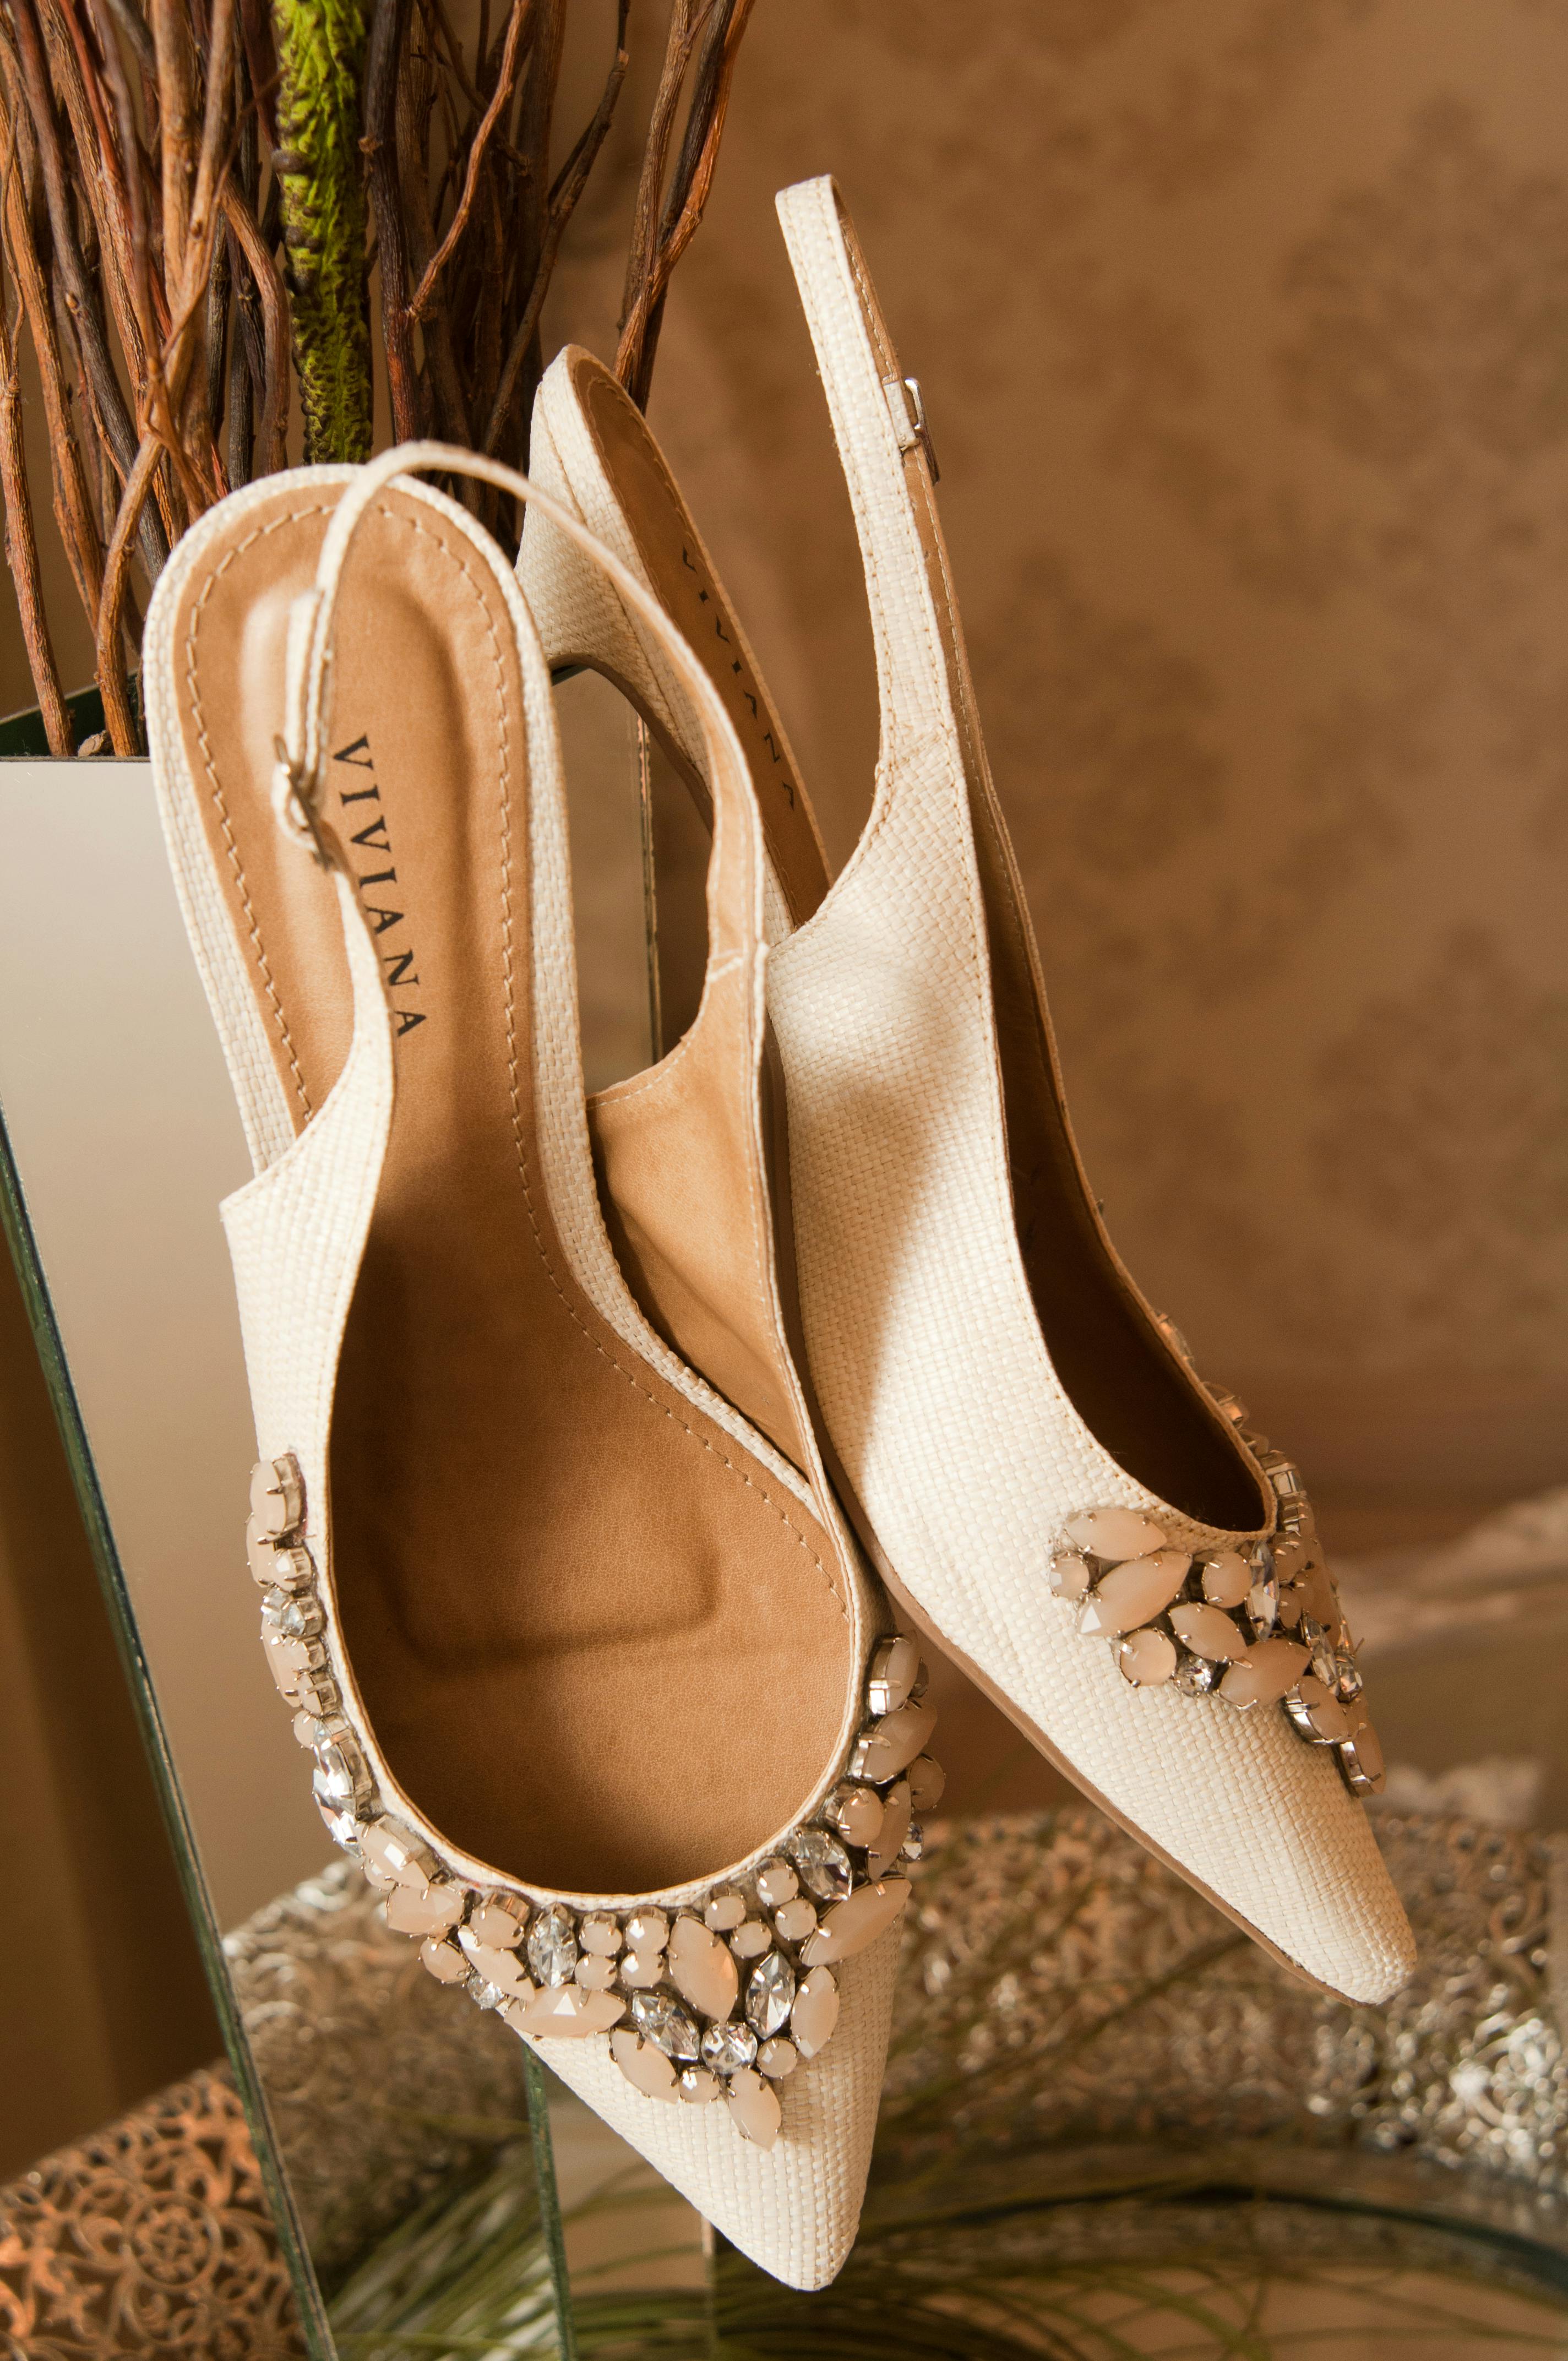 Wedding Shoes Photography Tips and Inspiration - Adorama